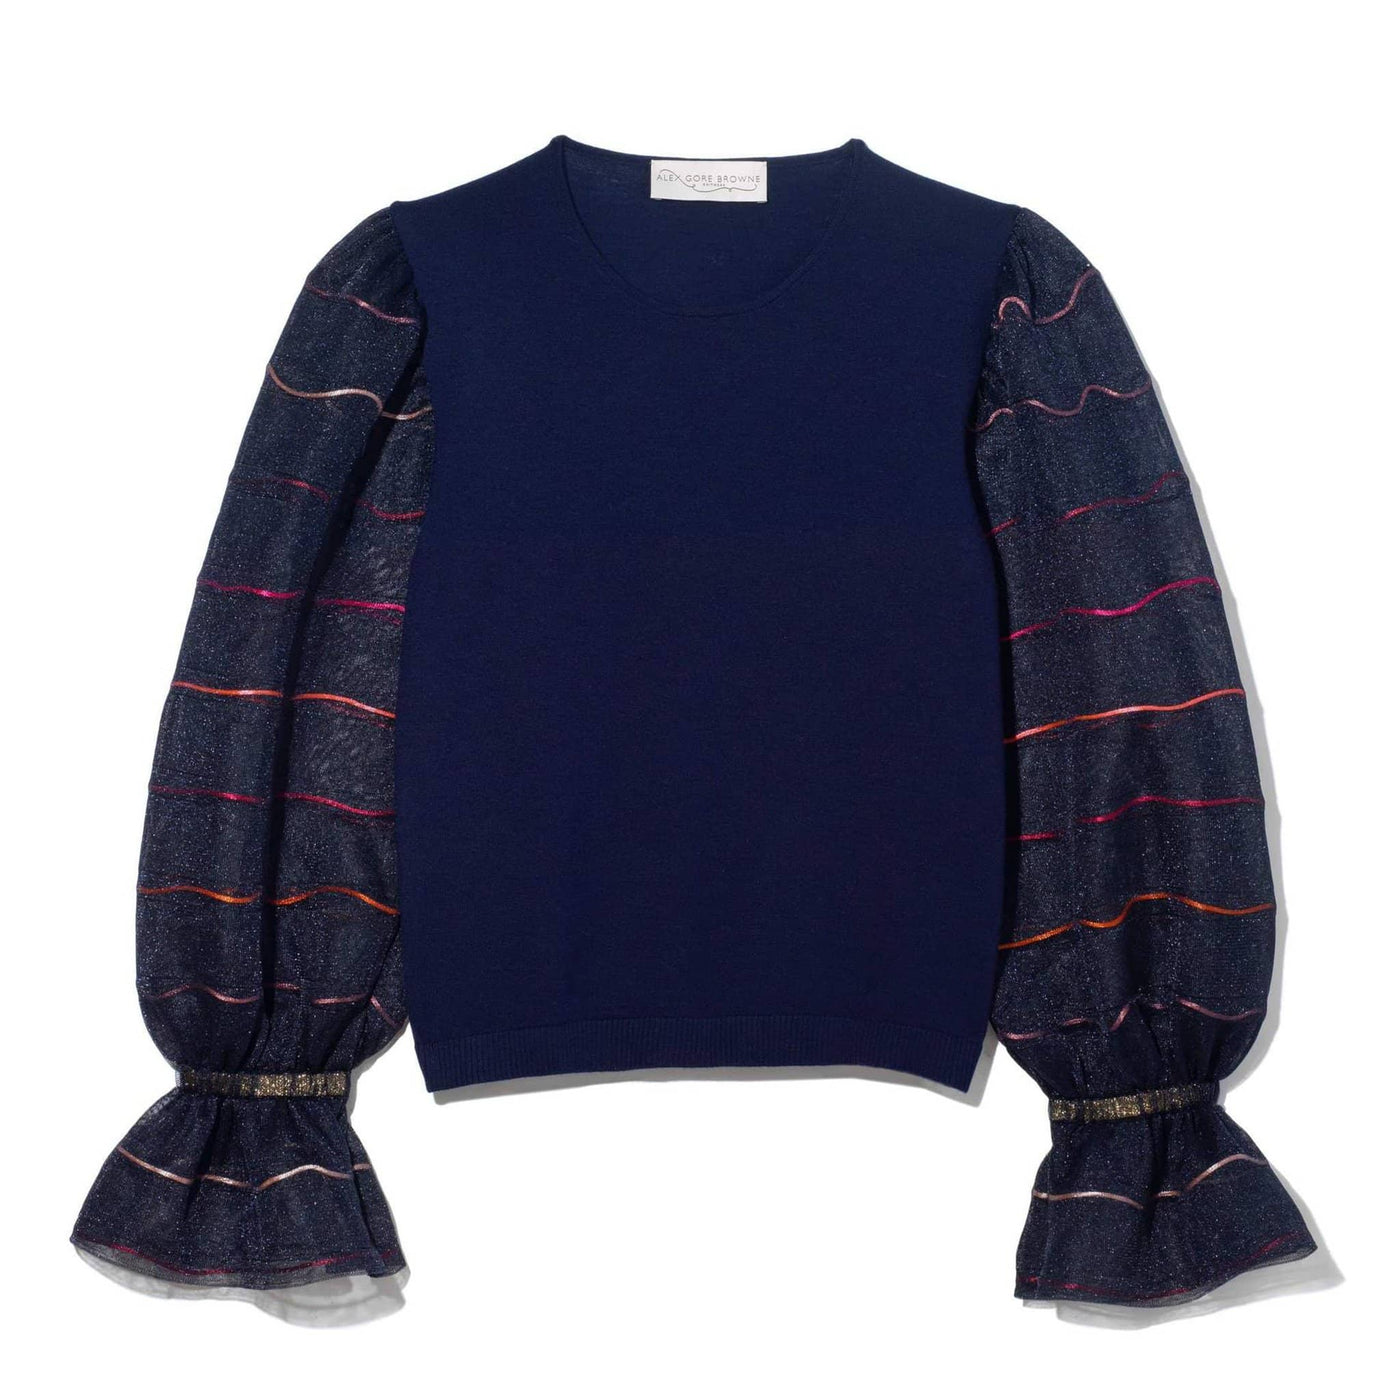 Navy Carousel Sweater - Satin Cord stripe